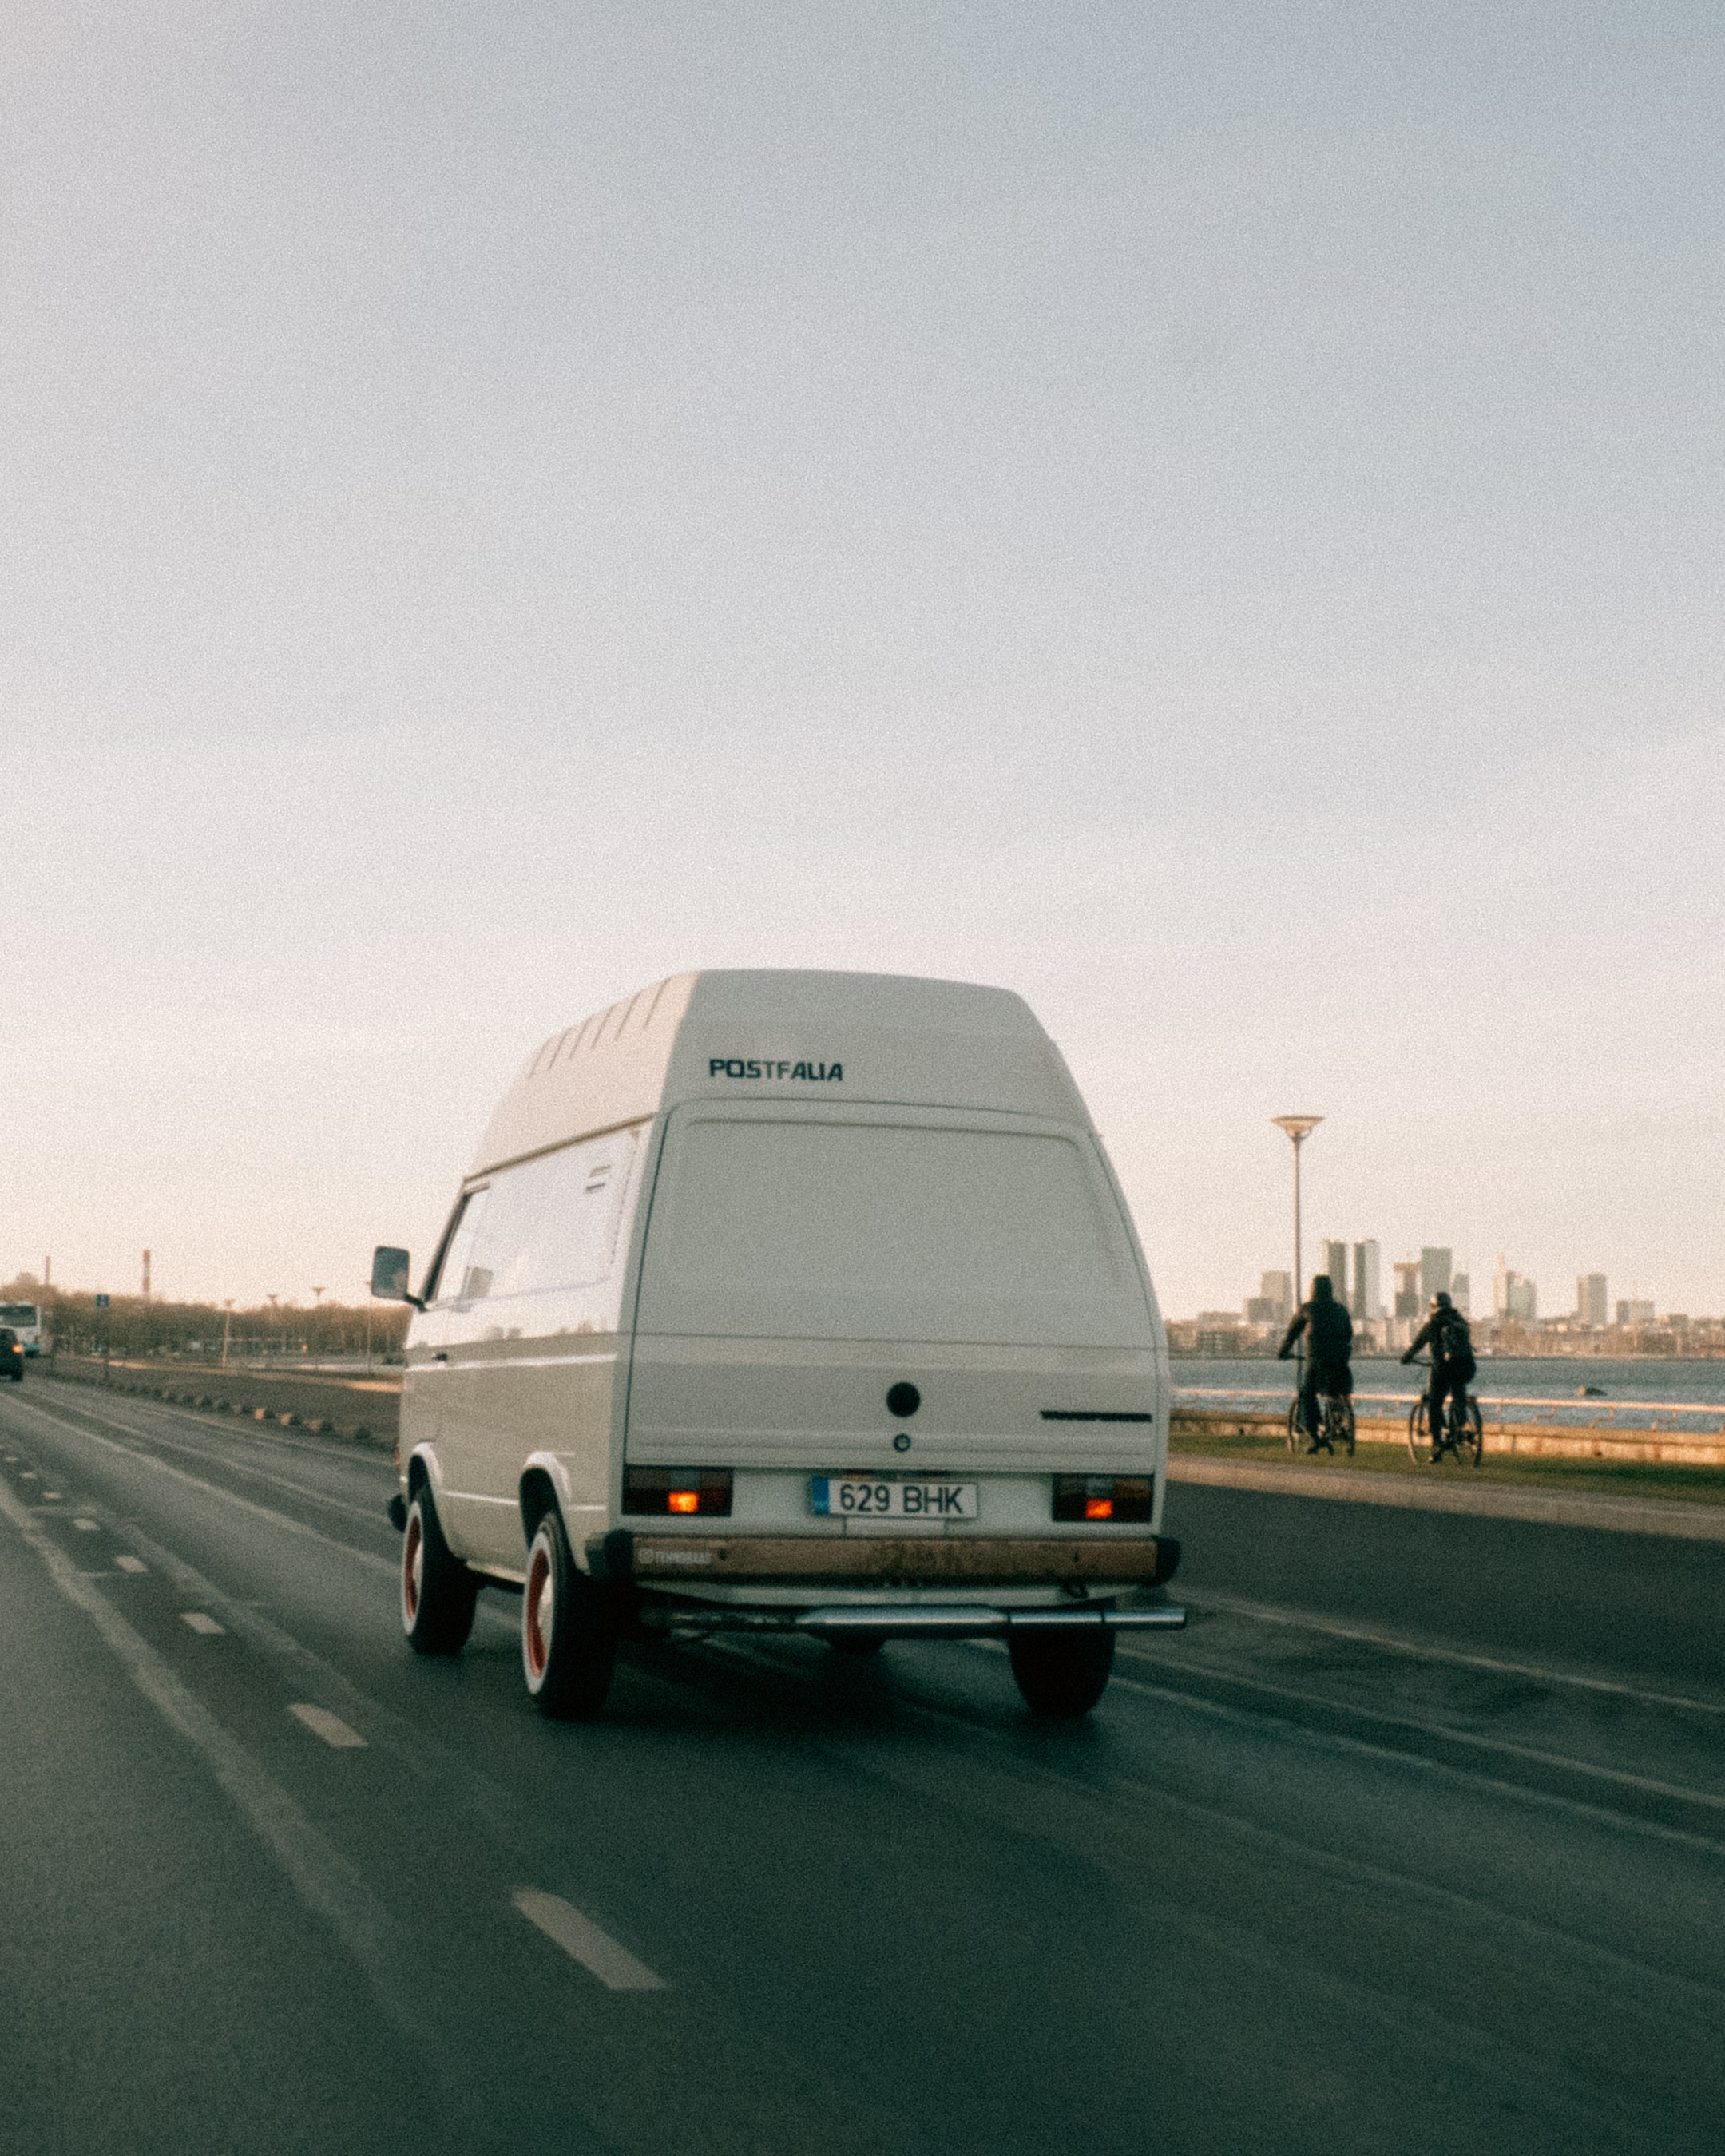 white van on road during daytime